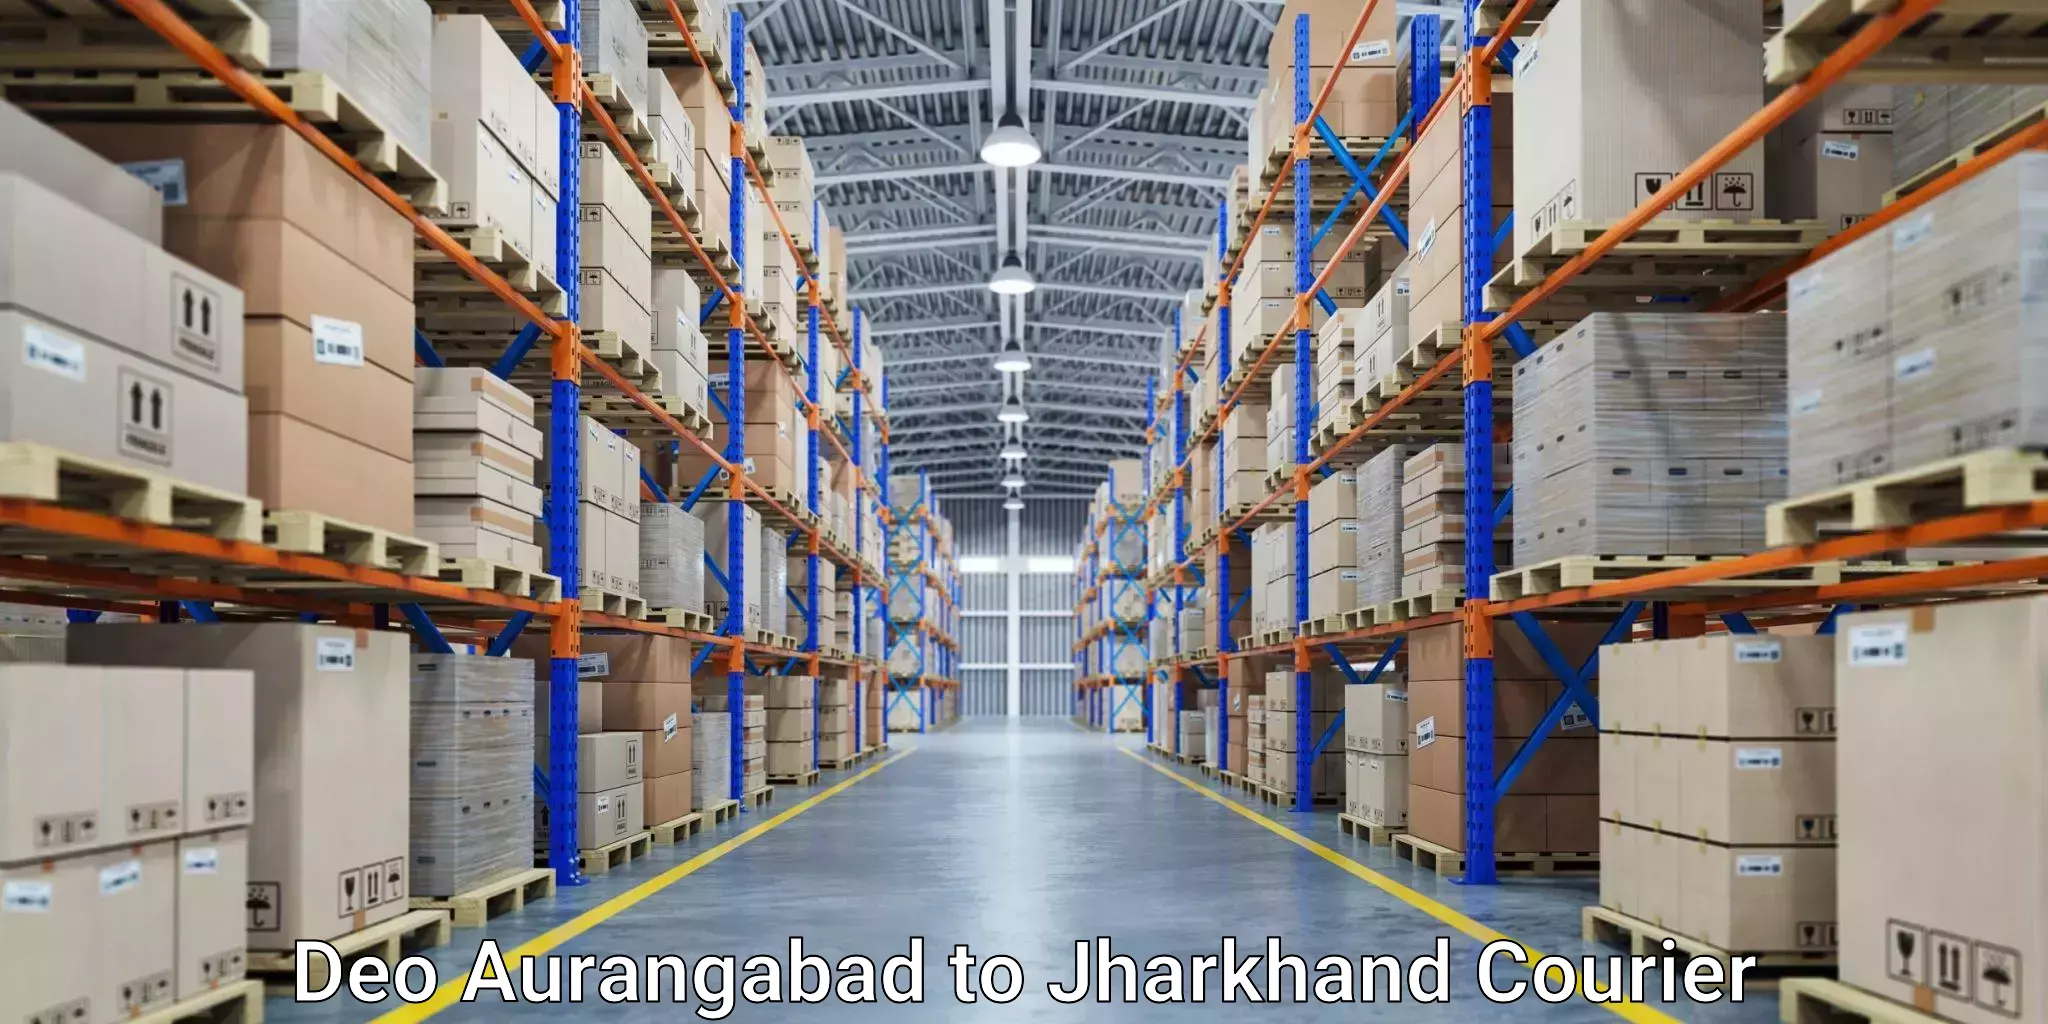 Premium courier services Deo Aurangabad to Jharkhand